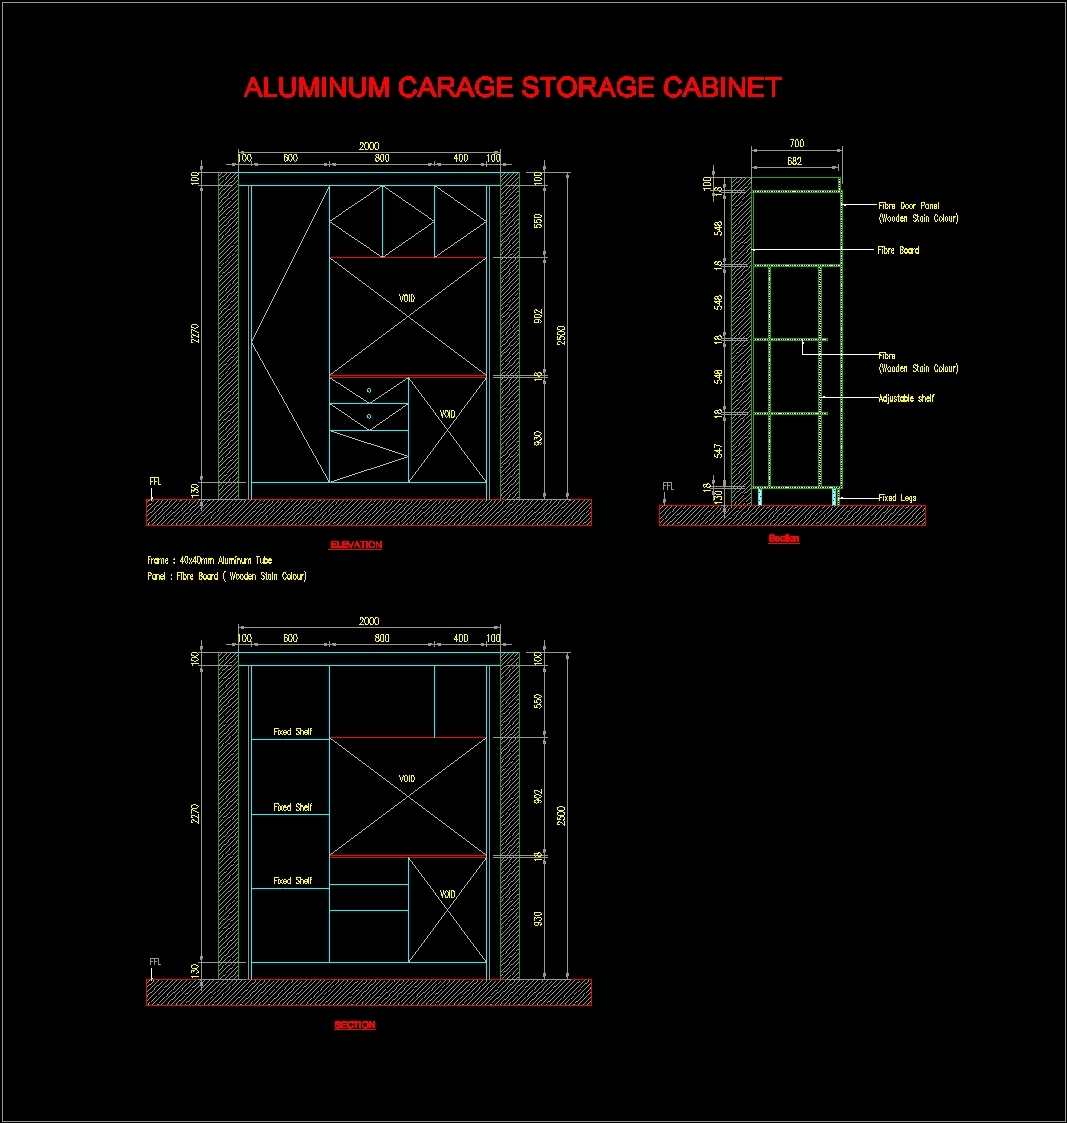 Carage Aluminum Storage Cabinet Dwg Block For Autocad Designs Cad